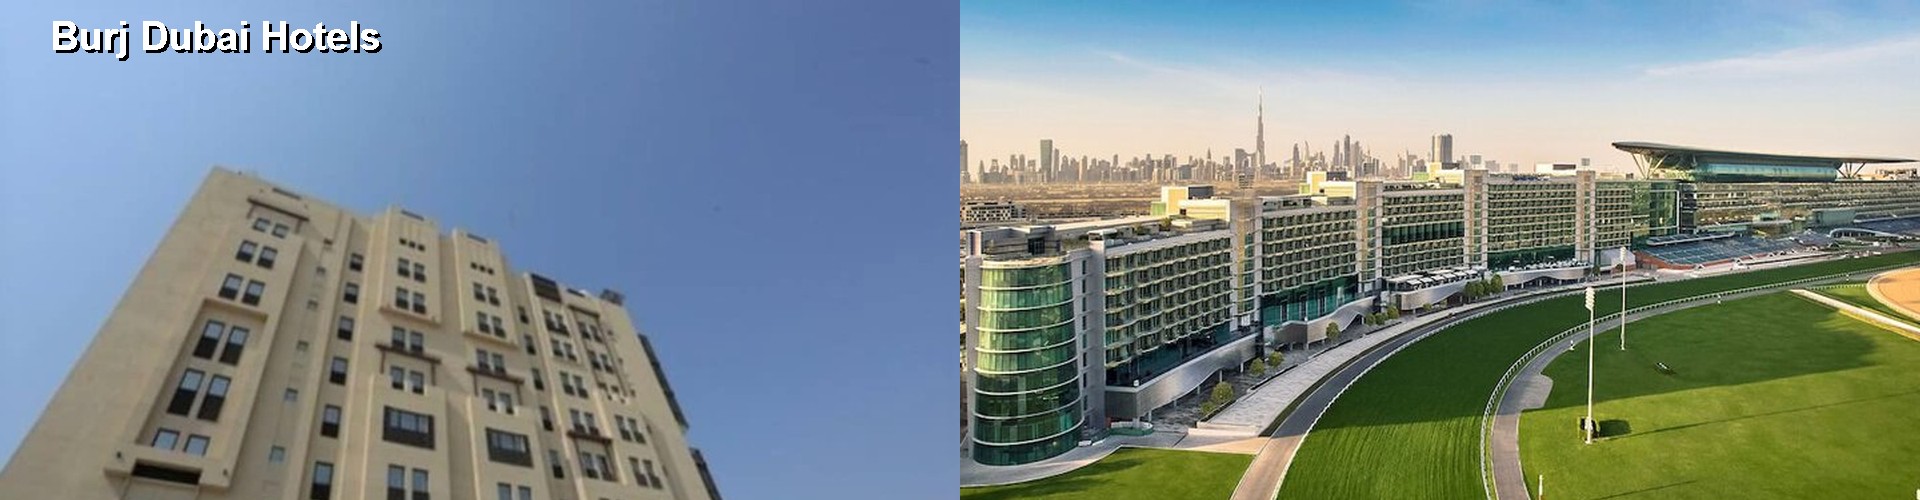 5 Best Hotels near Burj Dubai